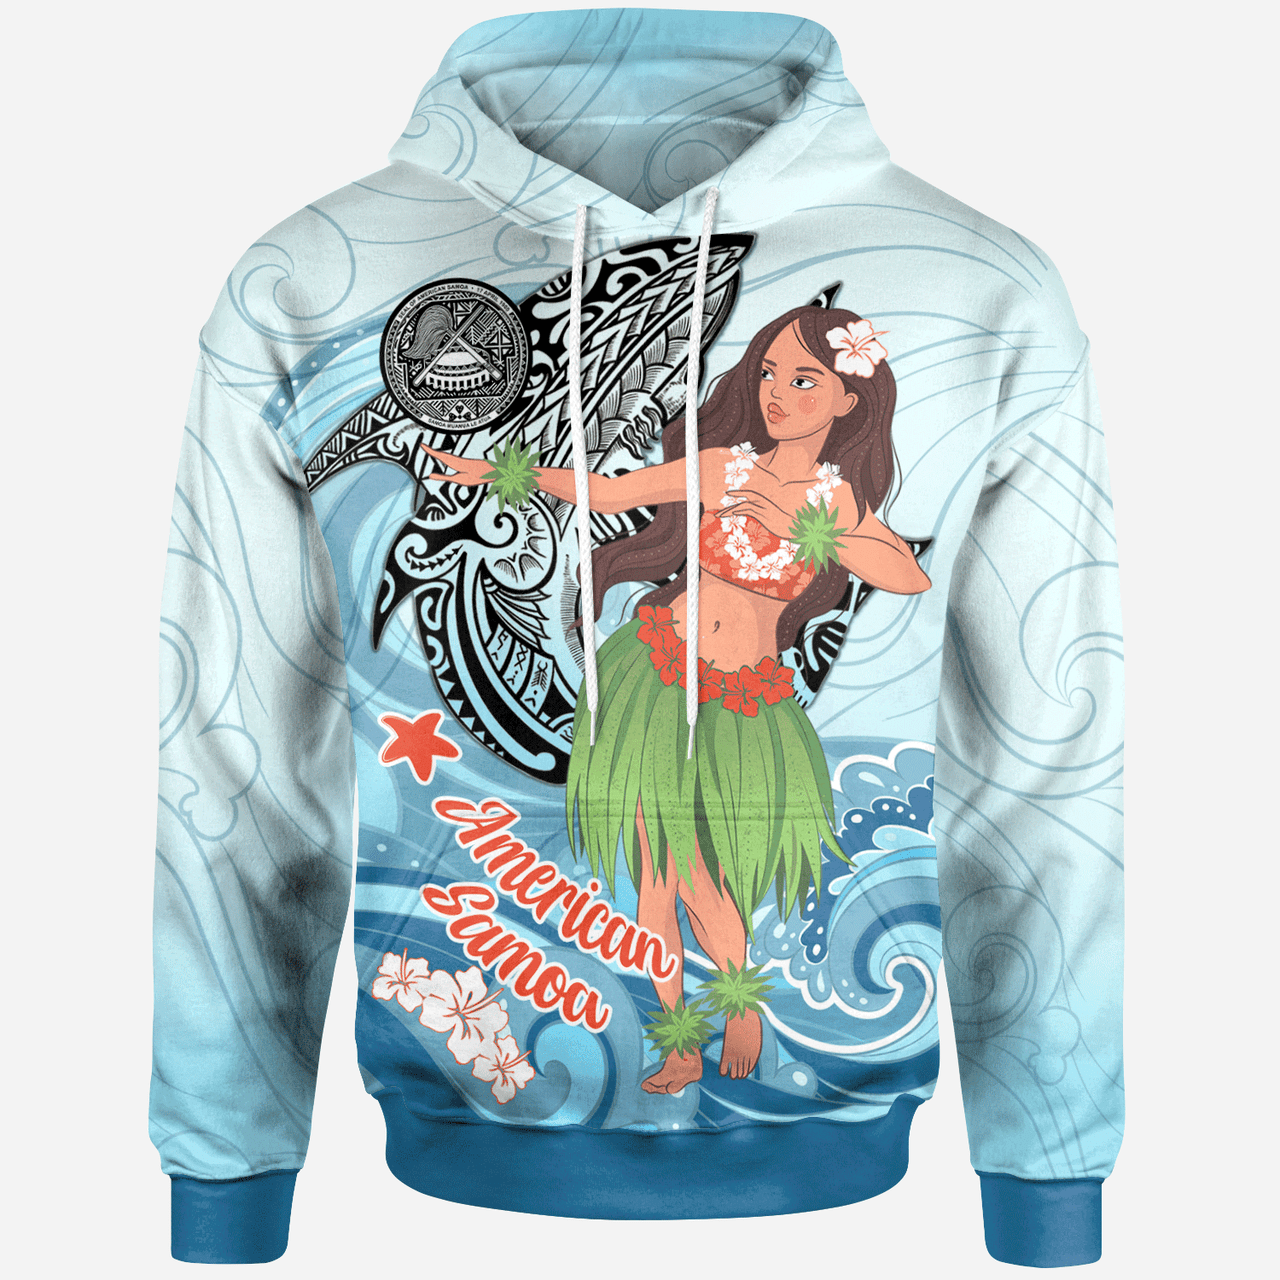 American Samoa Hoodie - Polynesian Girls With Shark